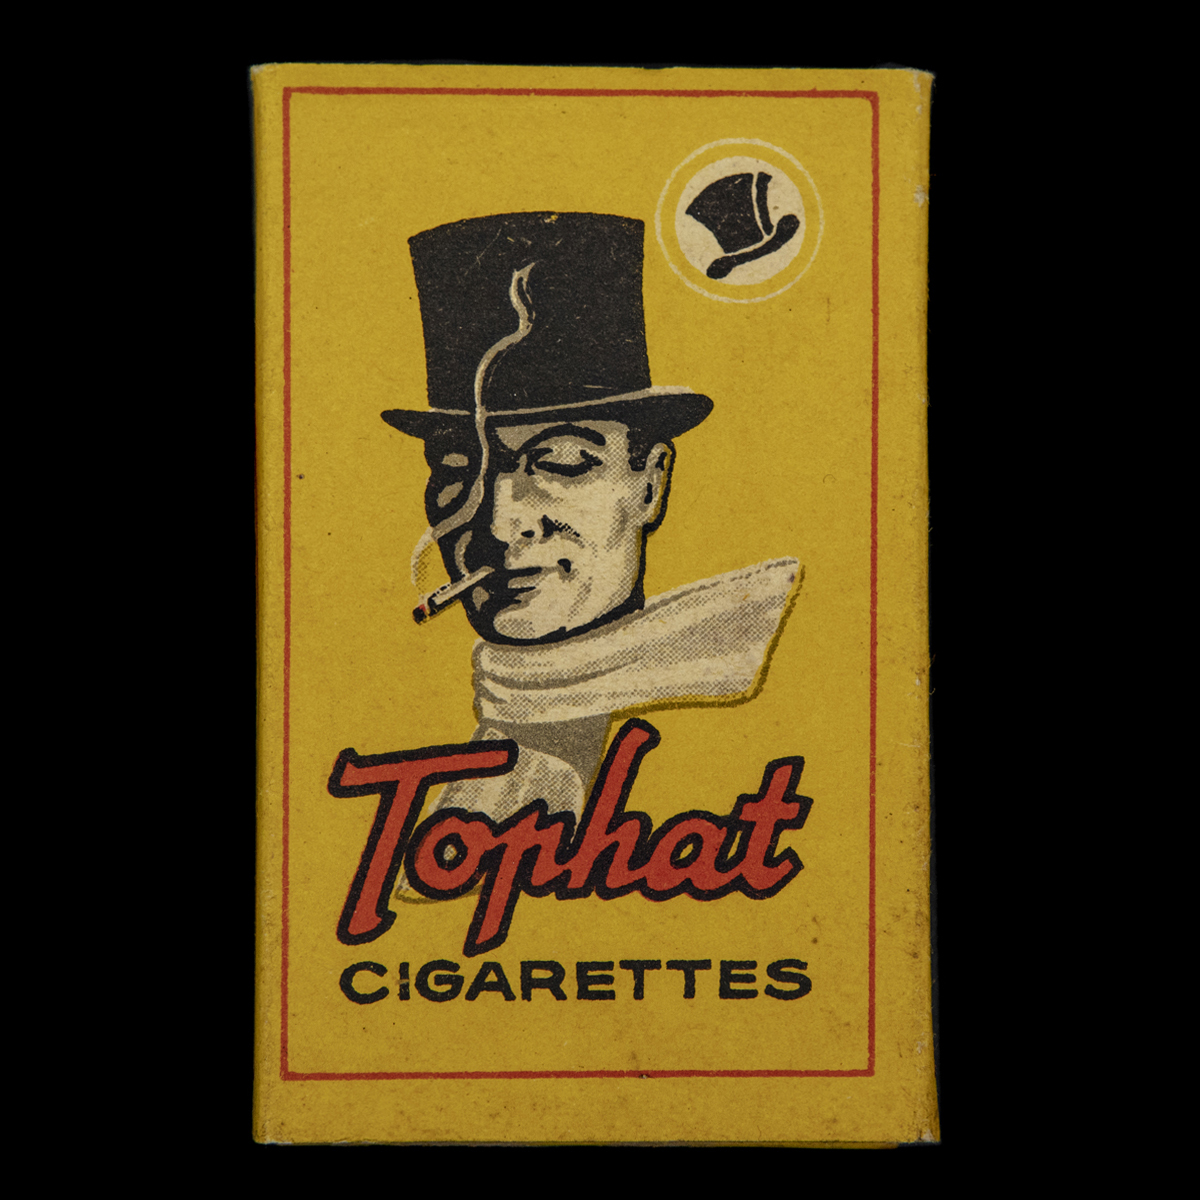 Tophat Cigarettes